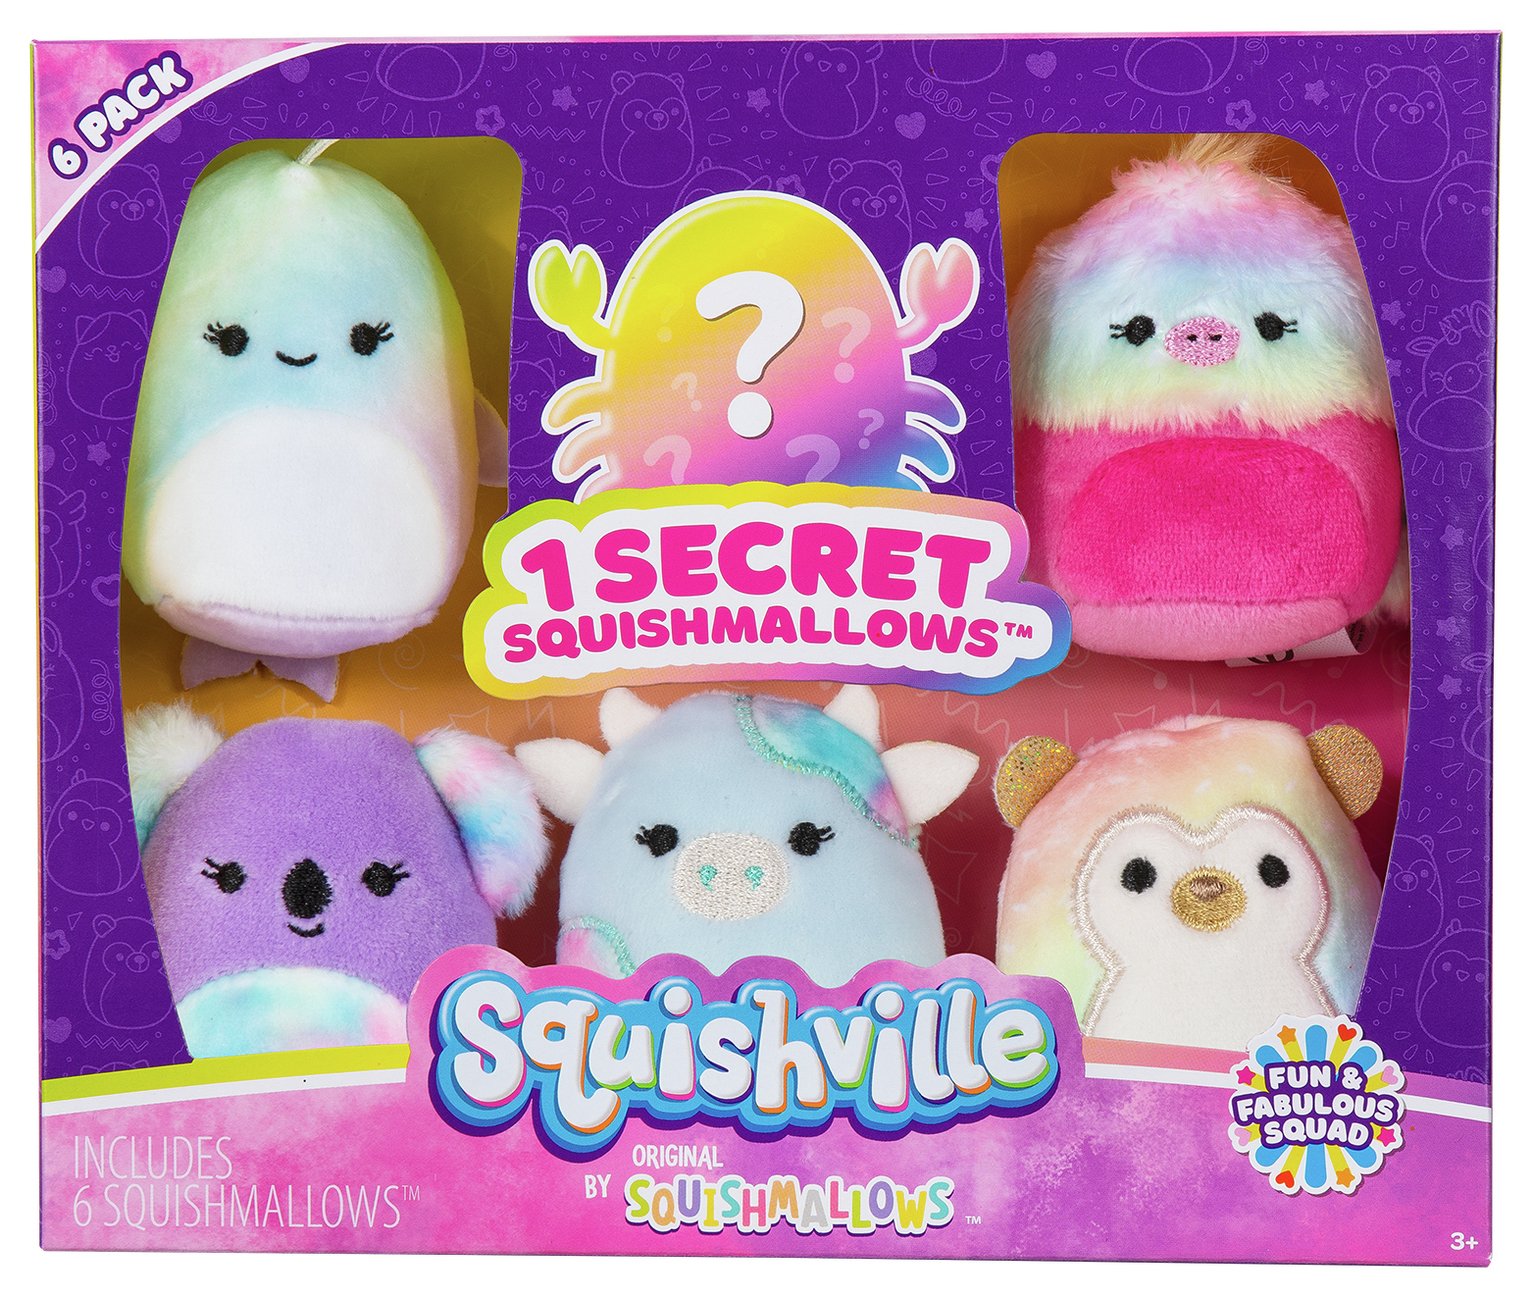 Squishville Squishmallows 6 - Fun & Fabulous Squad